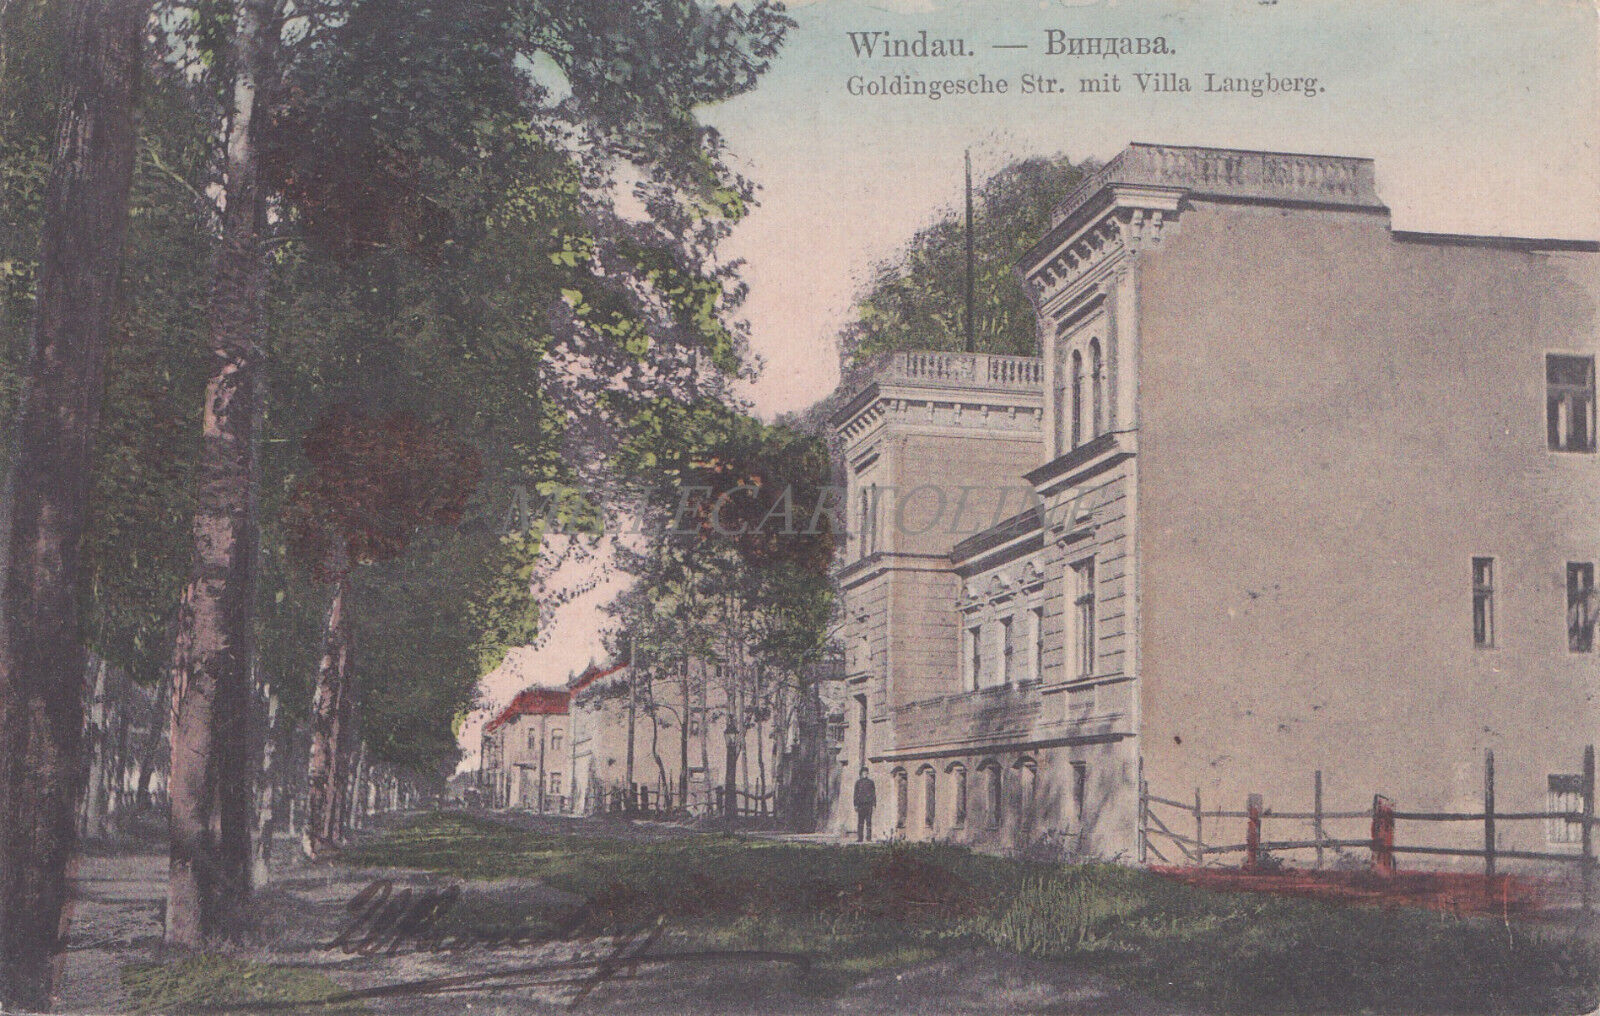 LATVIA - Windau, Ventspils, Goldingesche Str. mit Villa Langberg, Postcard 1903